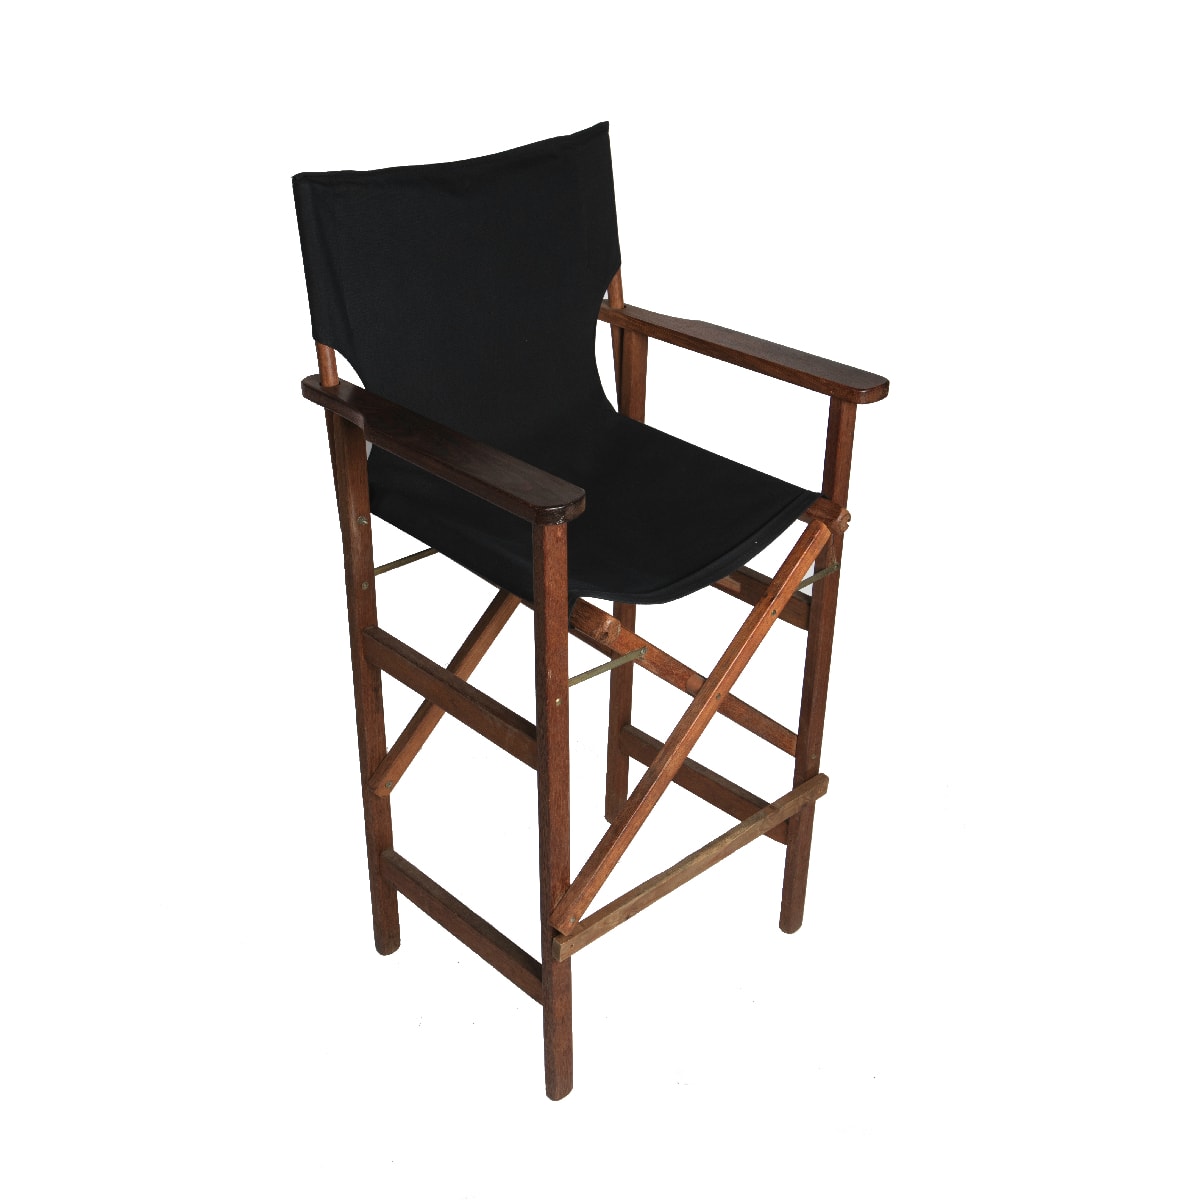  Folding chair (director's chair, high, wood)